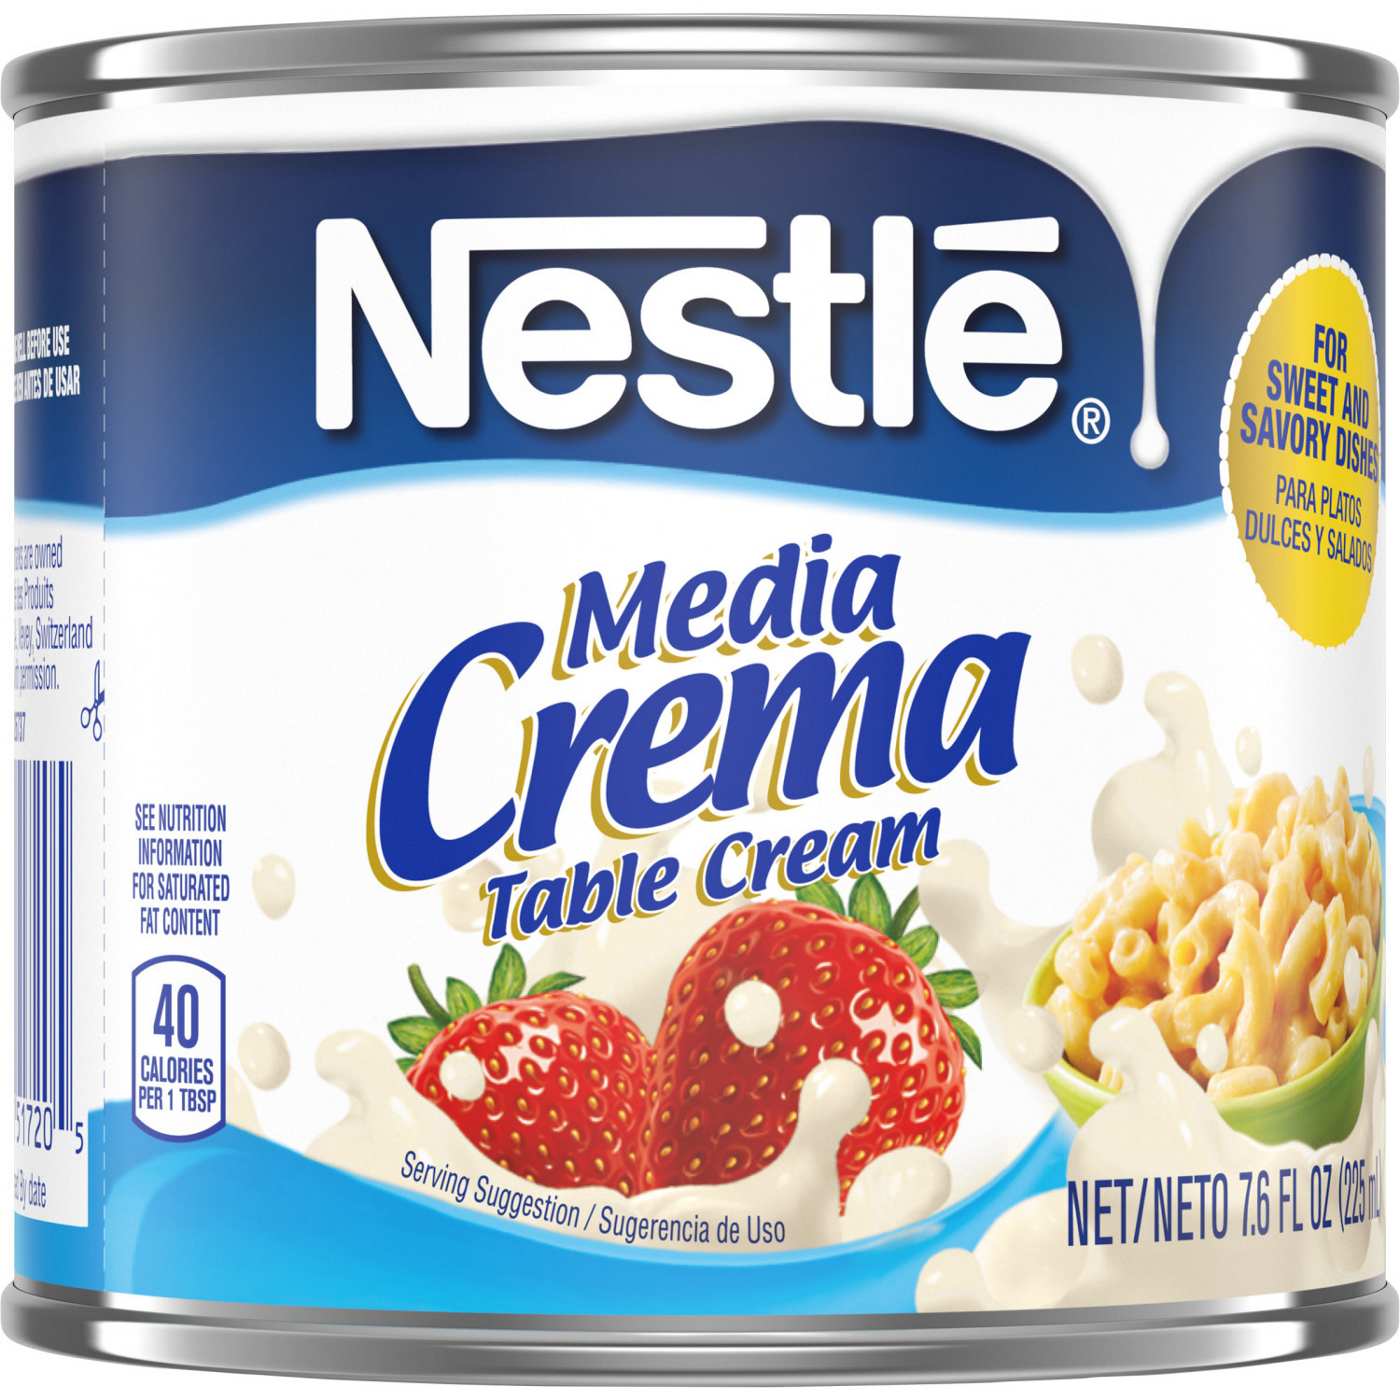 Nestle Media Crema Table Cream - Shop Evaporated Milk at H-E-B